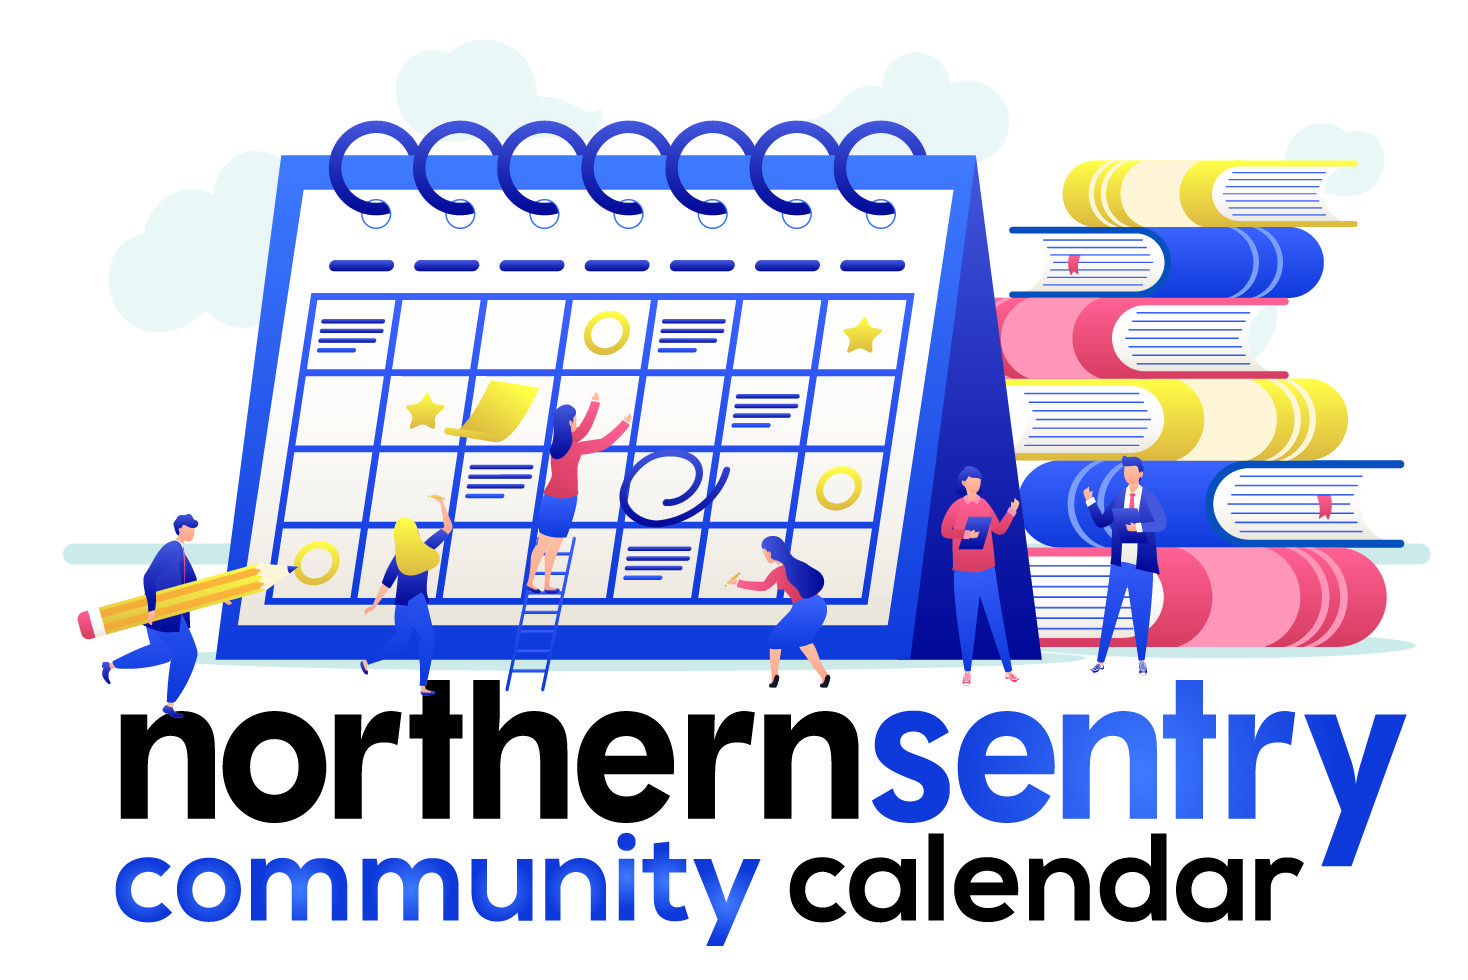 Introducing THE Community Calendar Northern Sentry